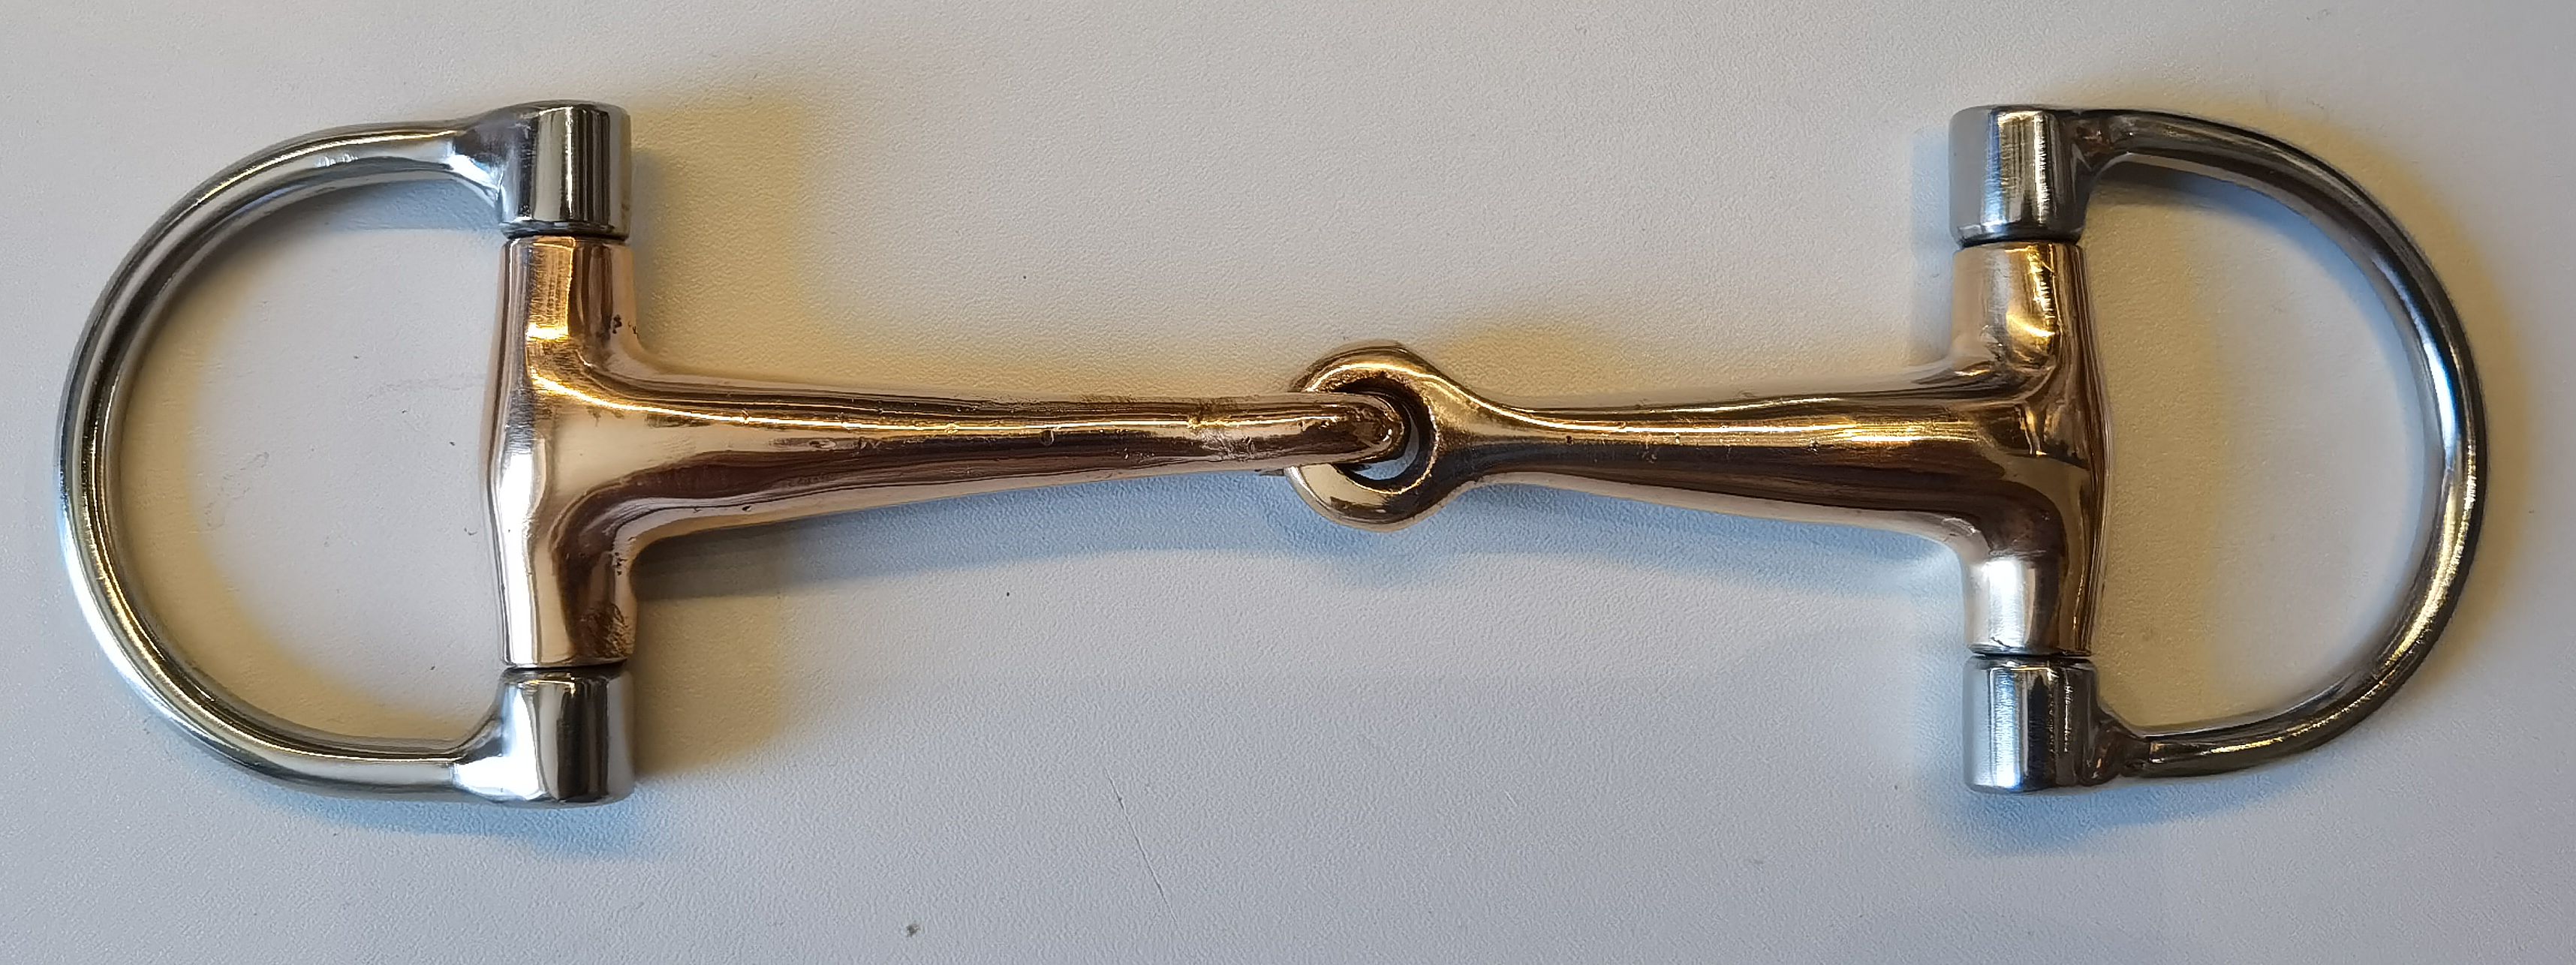 D-Ring Snaffle Bit, Wassertrense, 14,5 cm